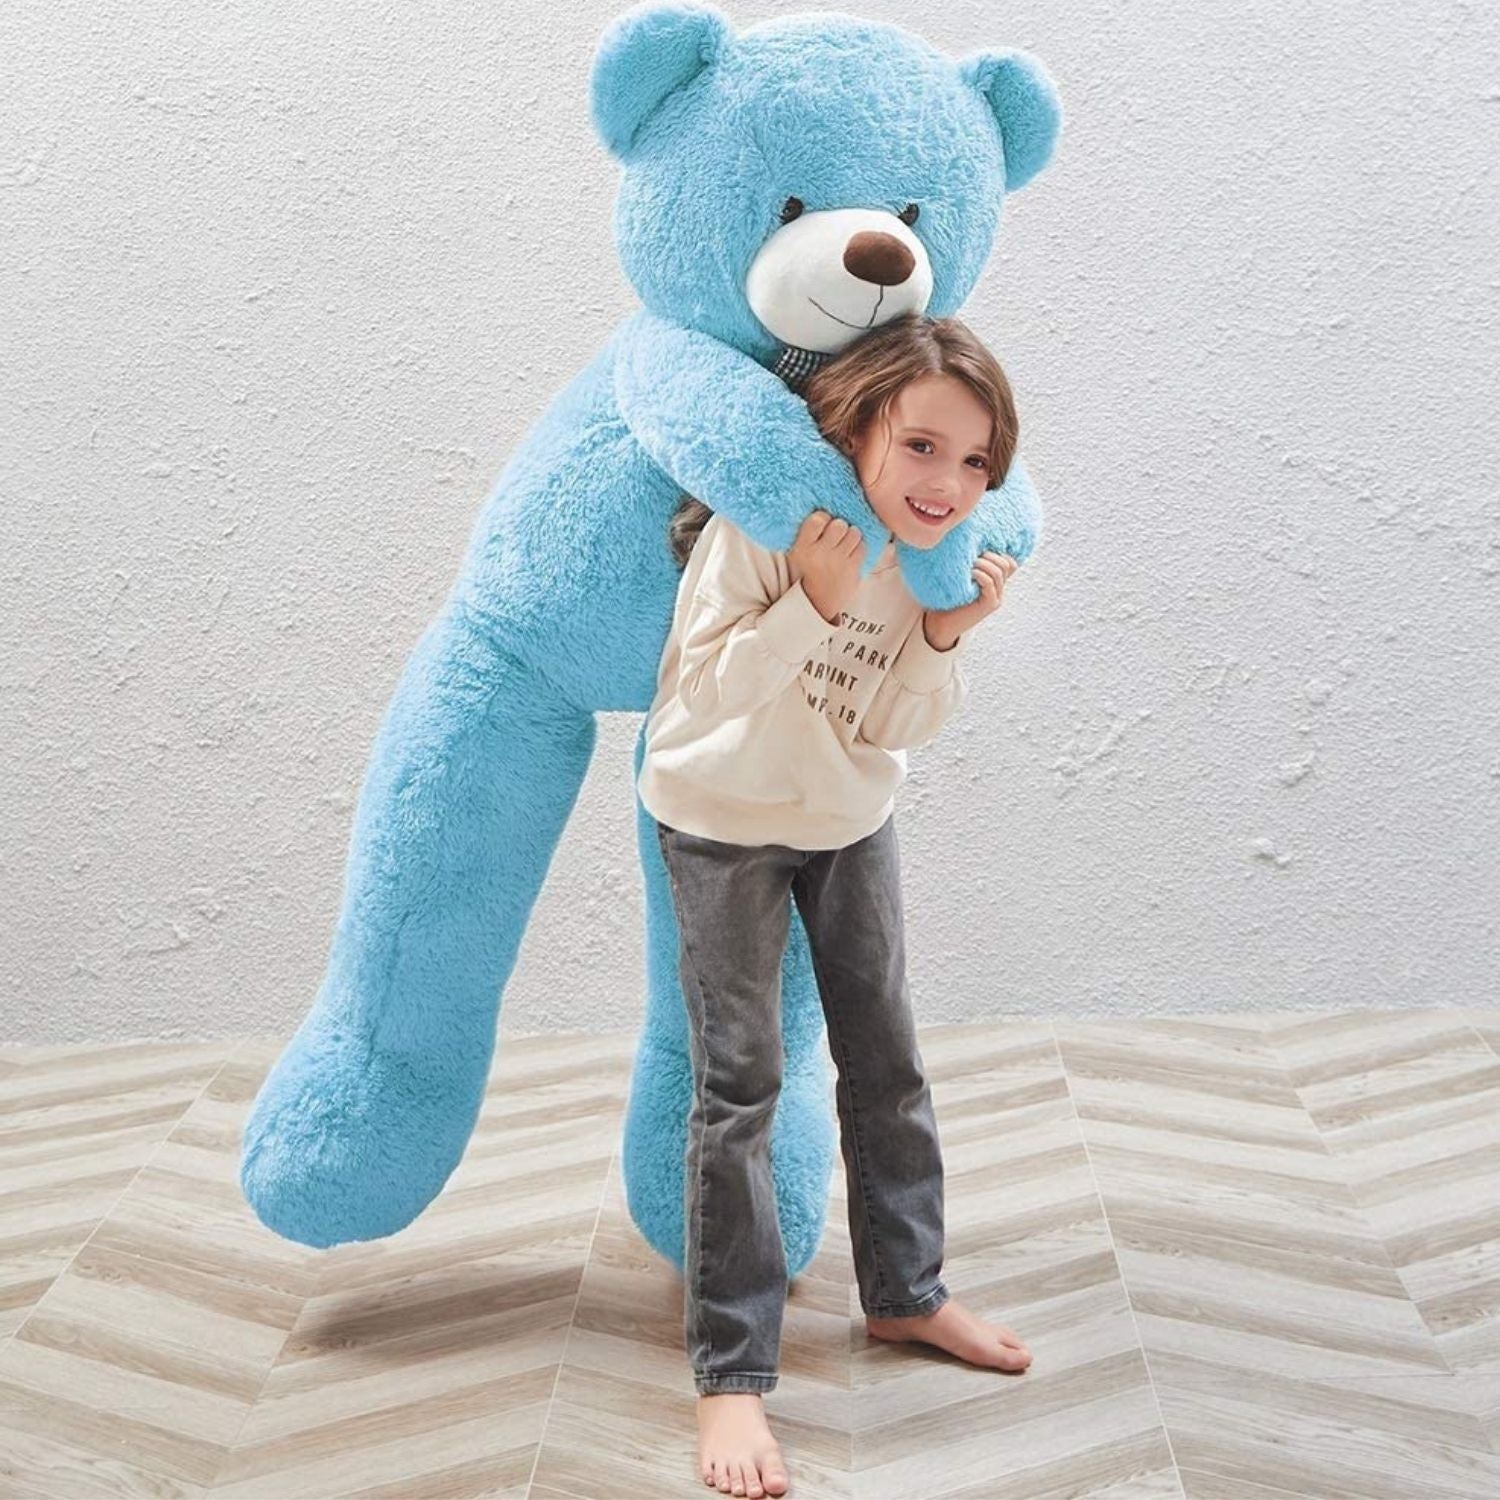 Giant Teddy Bear Stuffed Toy, Blue, 39/47/55/59 Inches